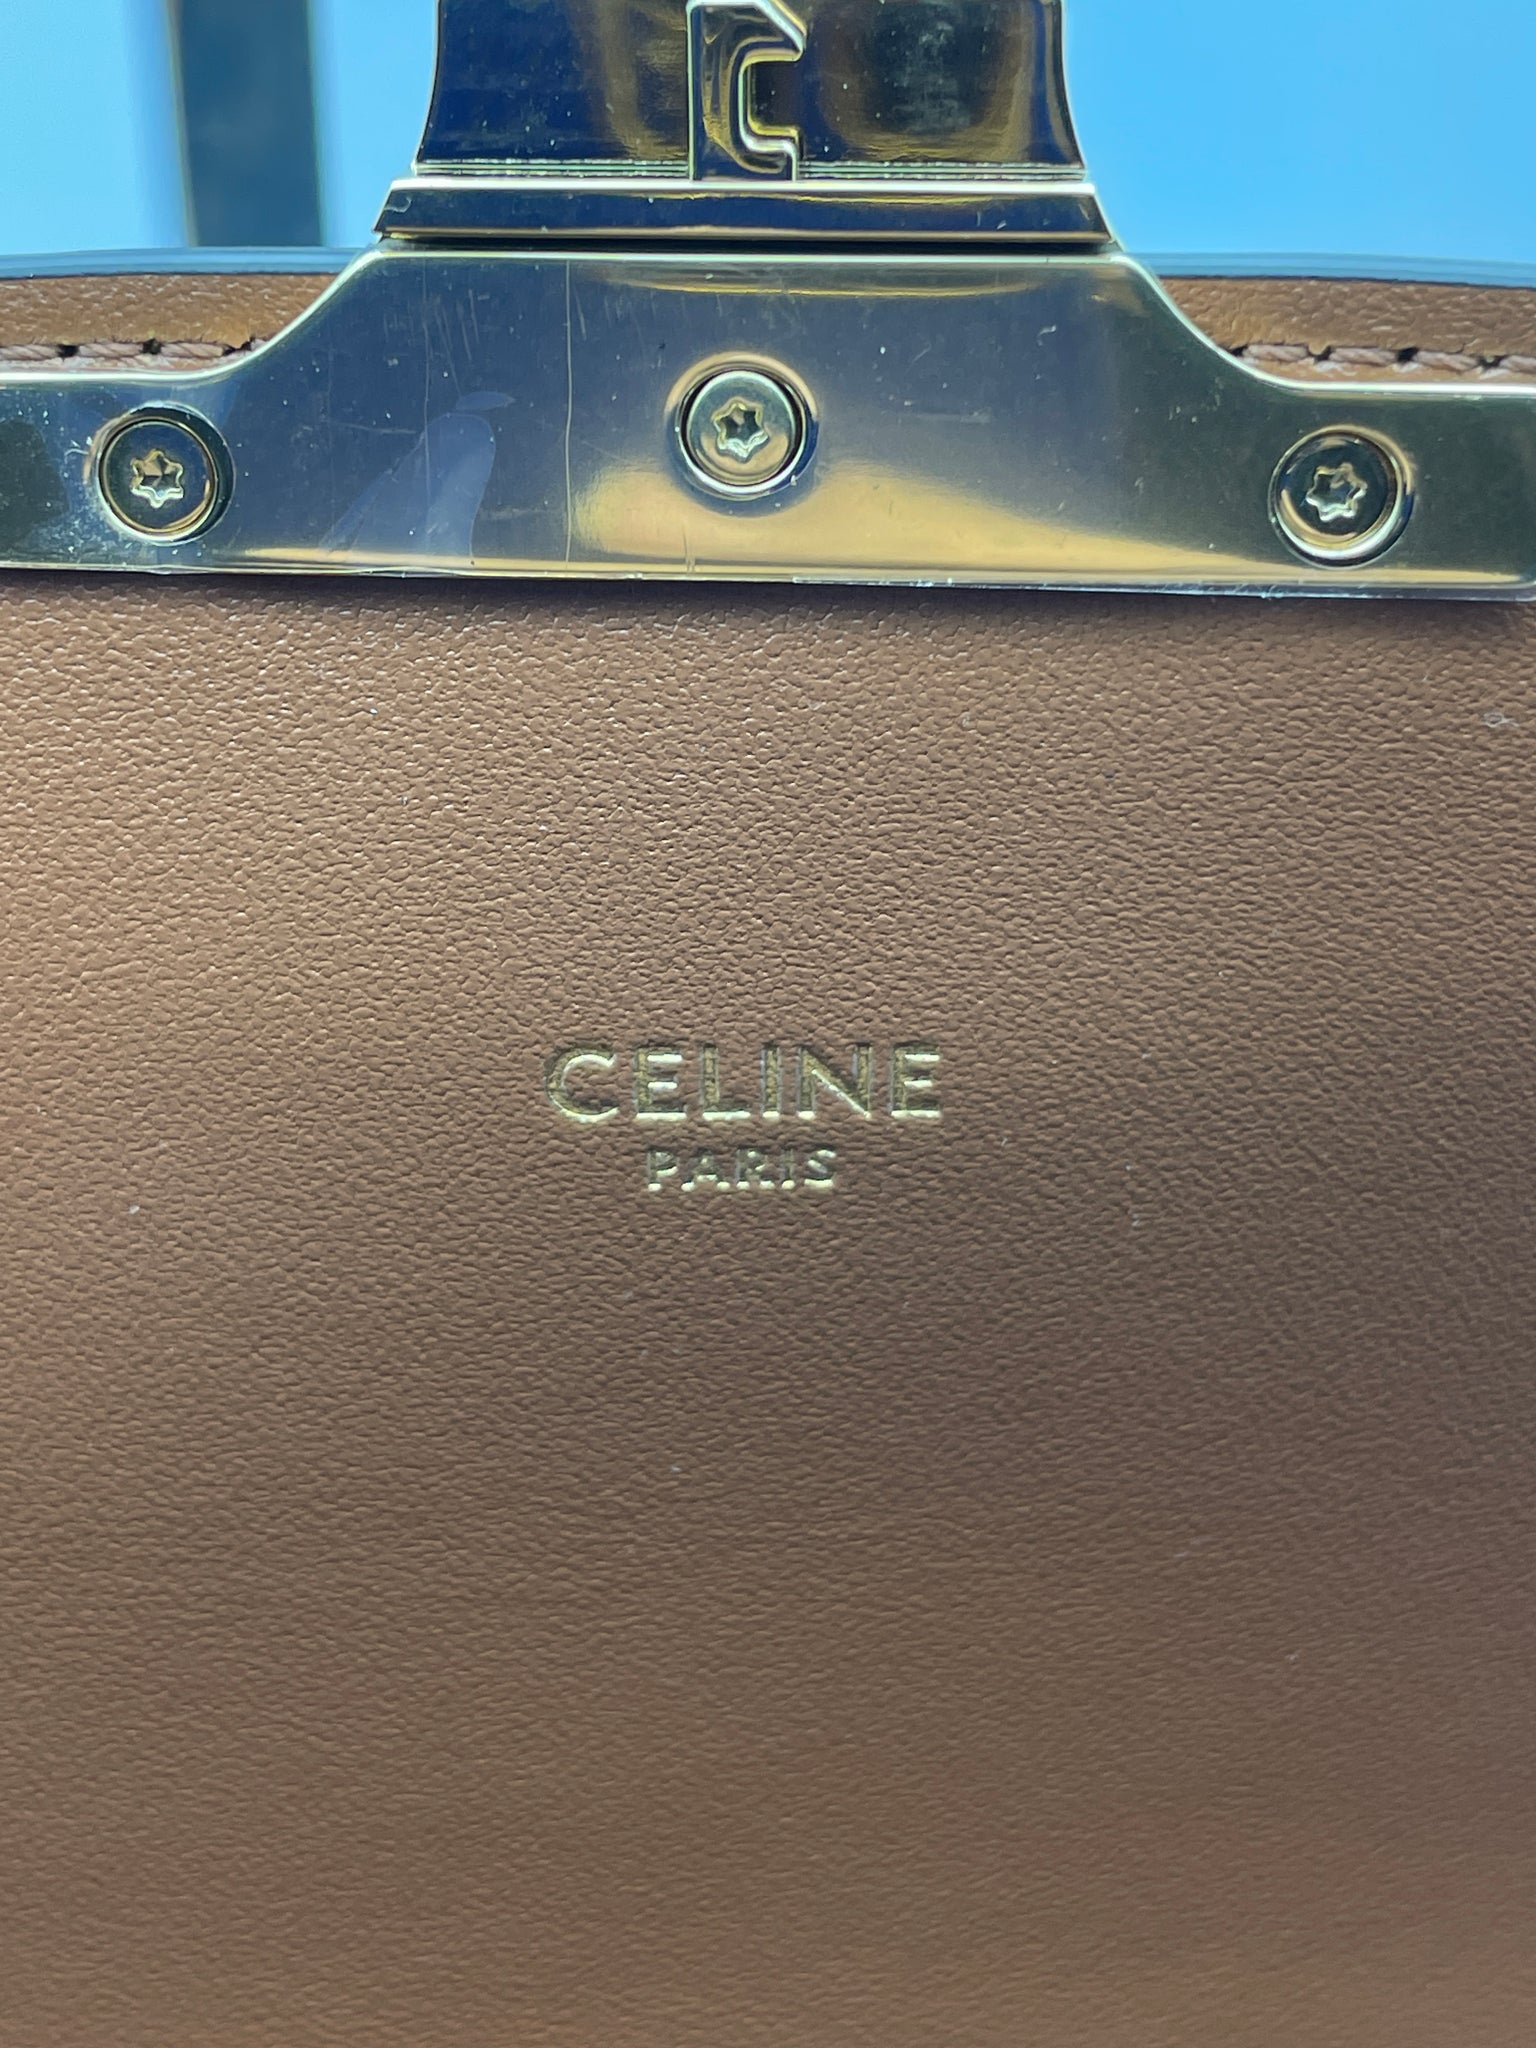 Celine hand bag : citycitycity_global